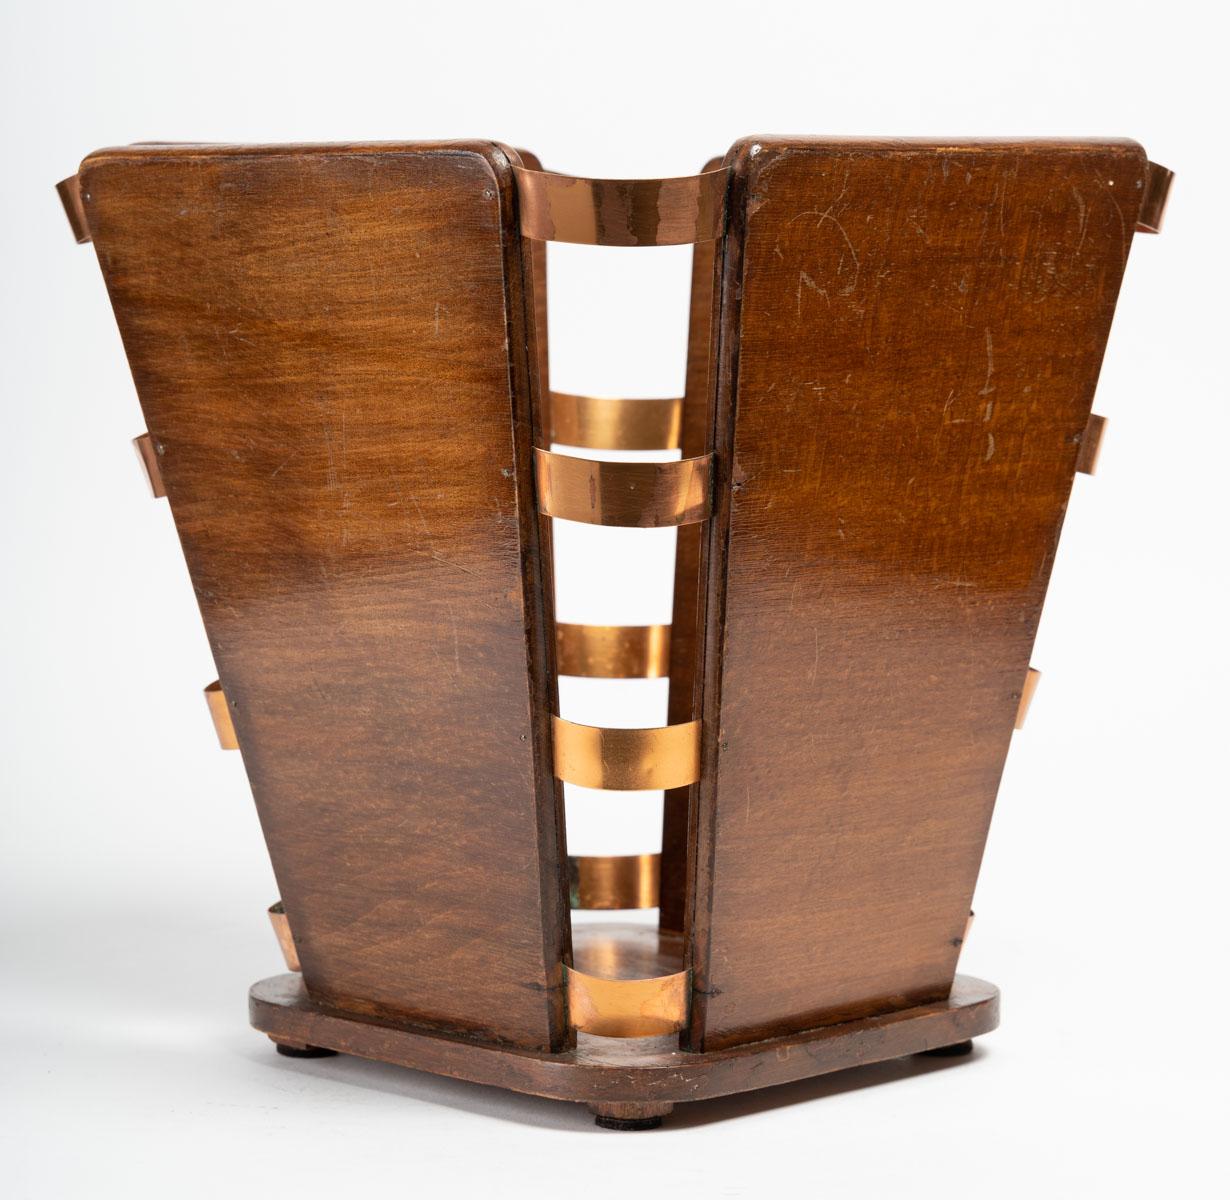 20th Century Ruhlmann's Office Wastepaper Basket, 1930-1940